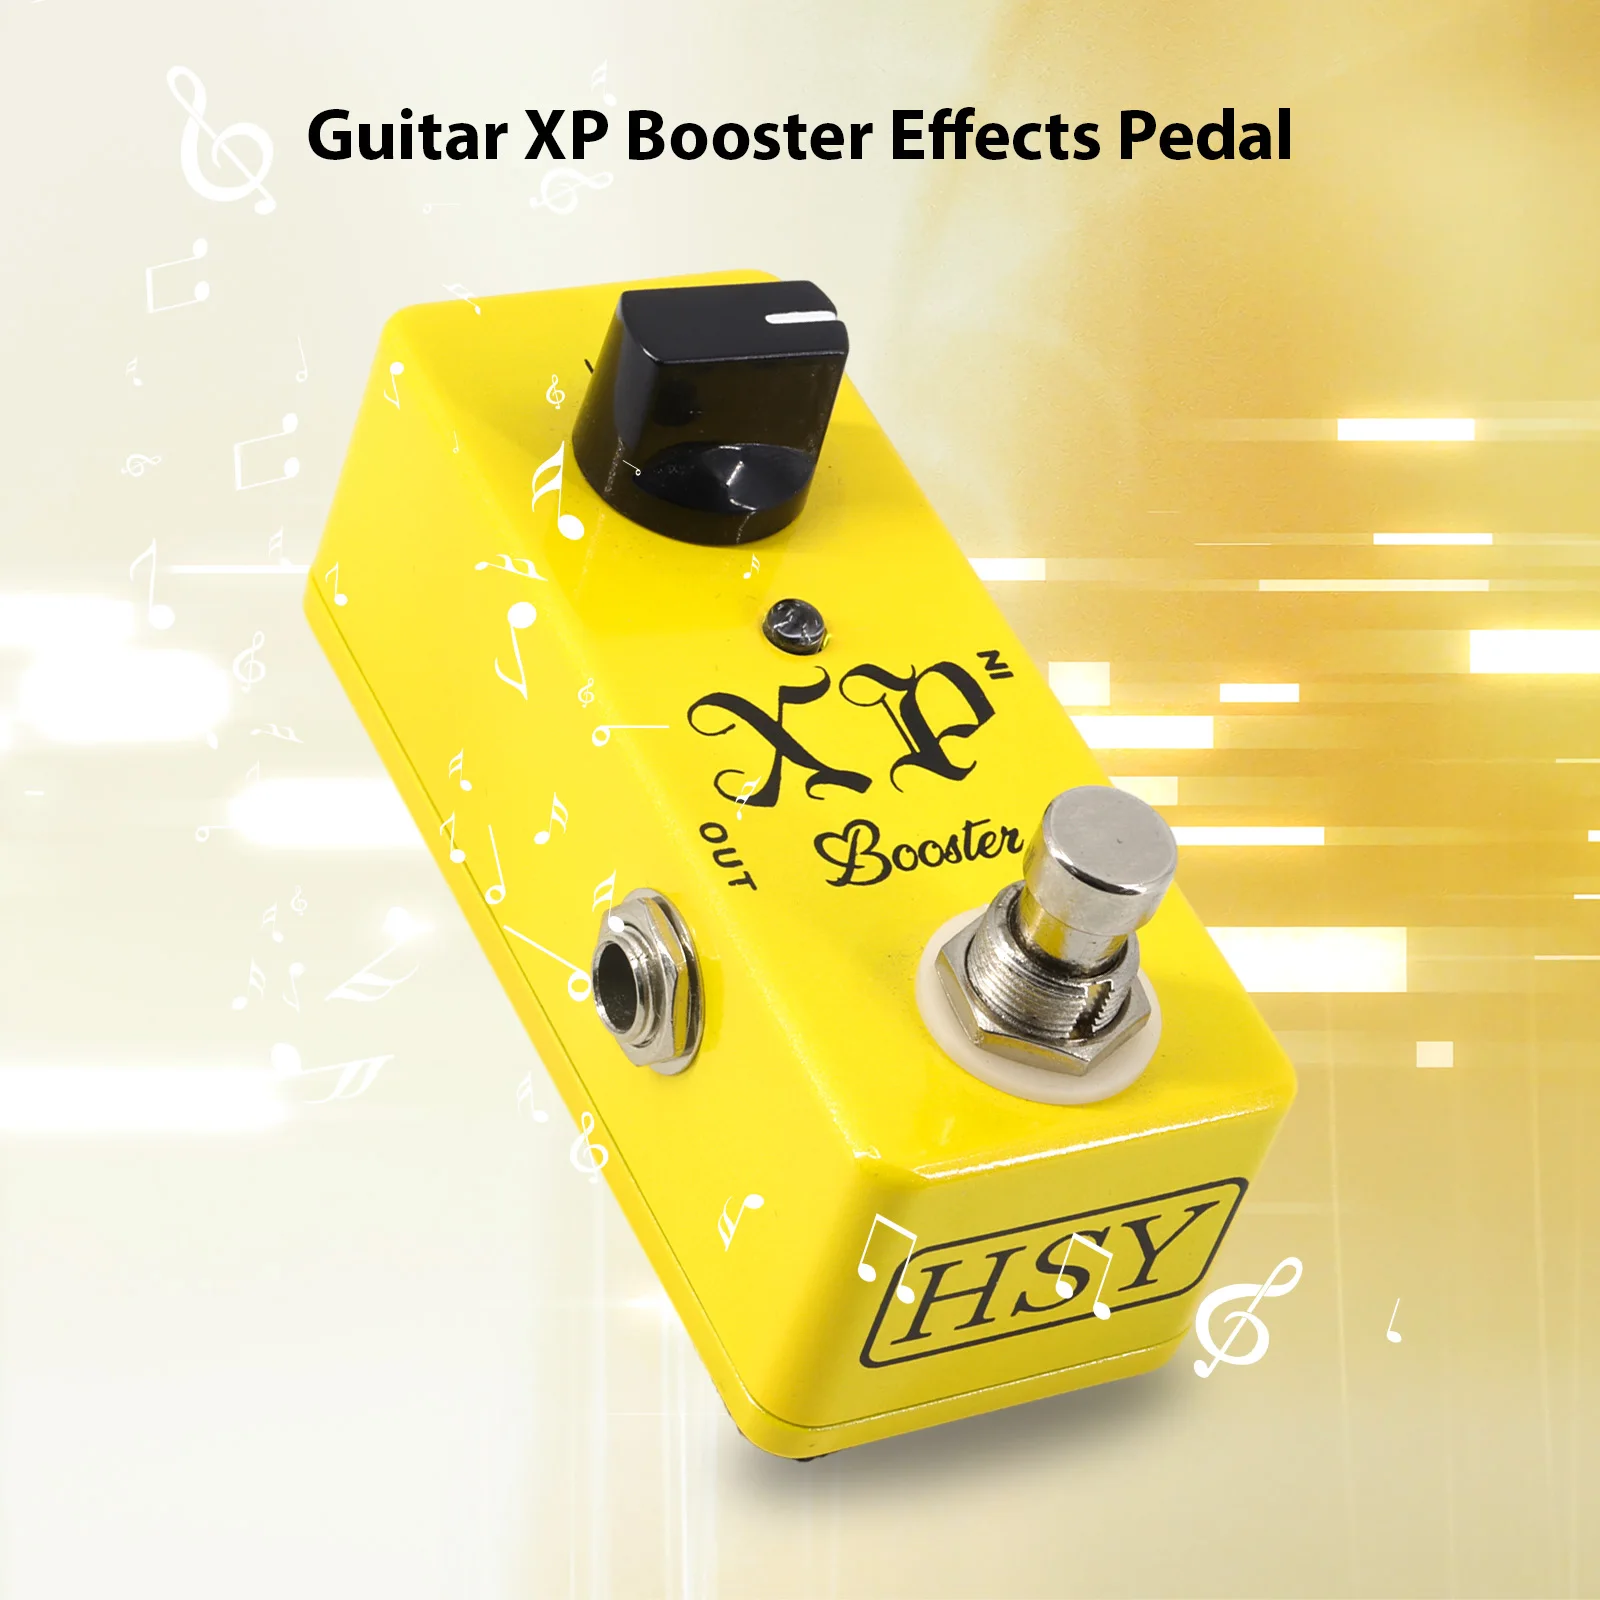 

Guitar XP Booster Pedal Electric Guitar Effects Pedal True Bypass Zinc Alloy Shell DC 9V 6.35mm Input/Output Interface